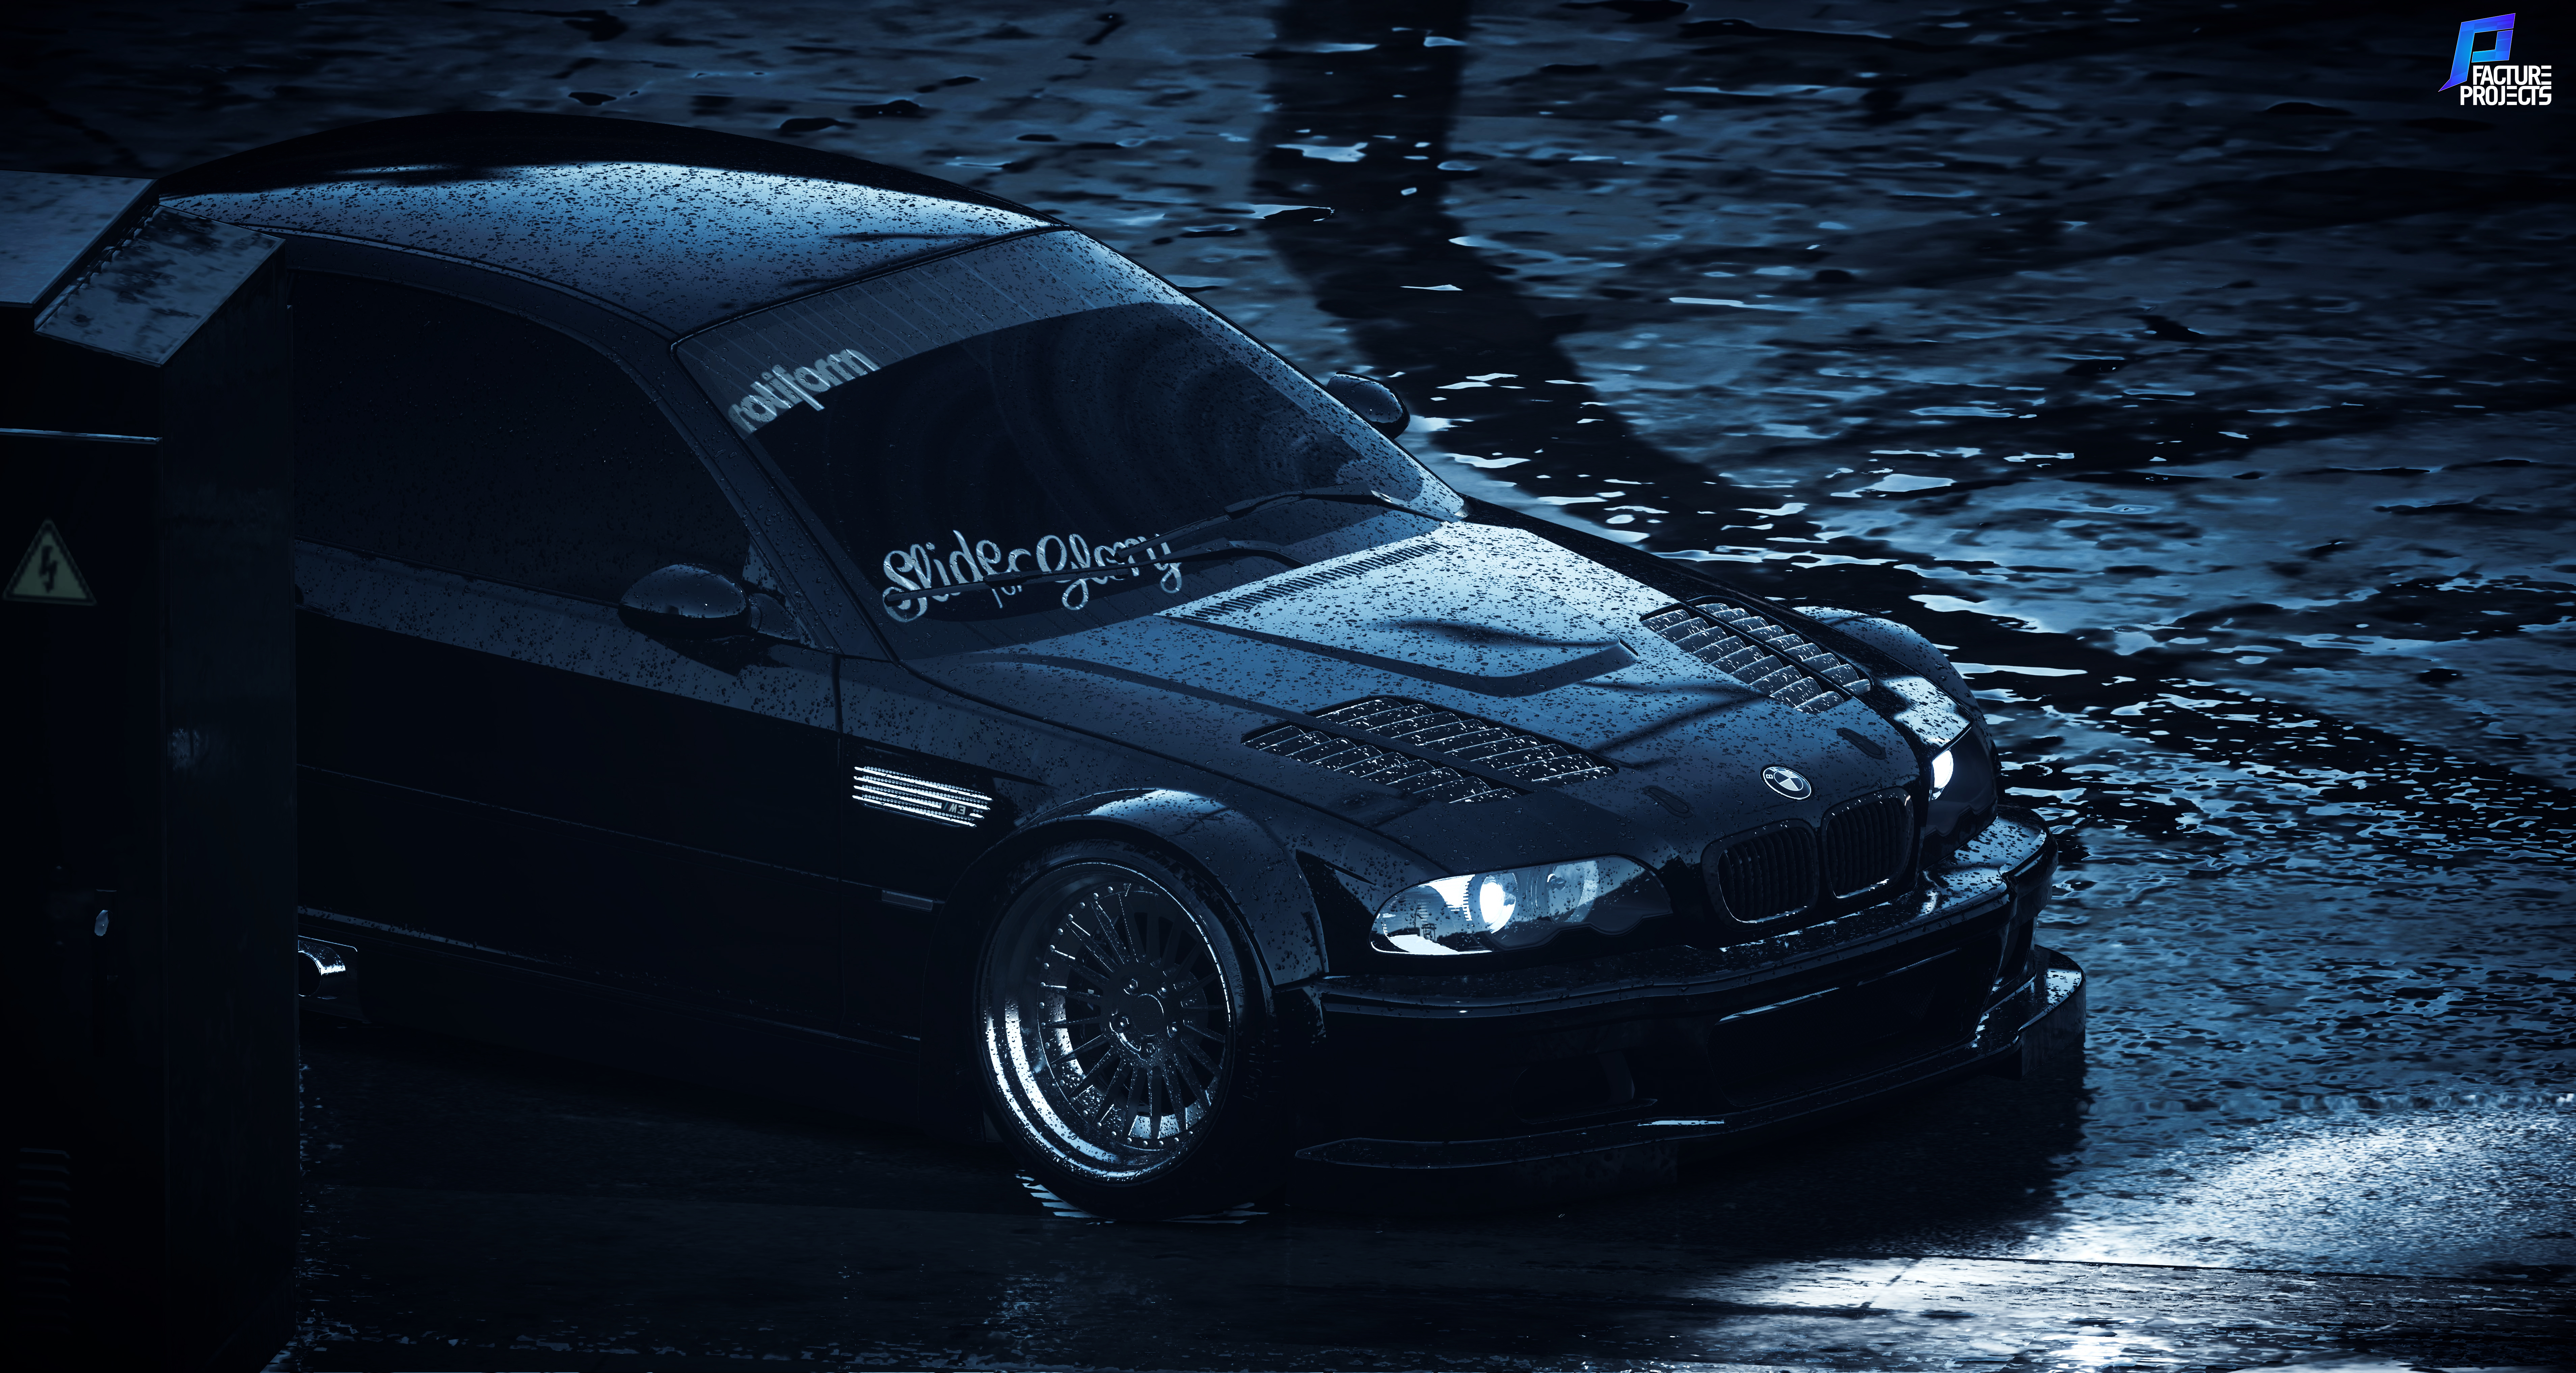 BMW BMW M3 E46 Black Black Cars Need For Speed NFS 2015 7632x4068